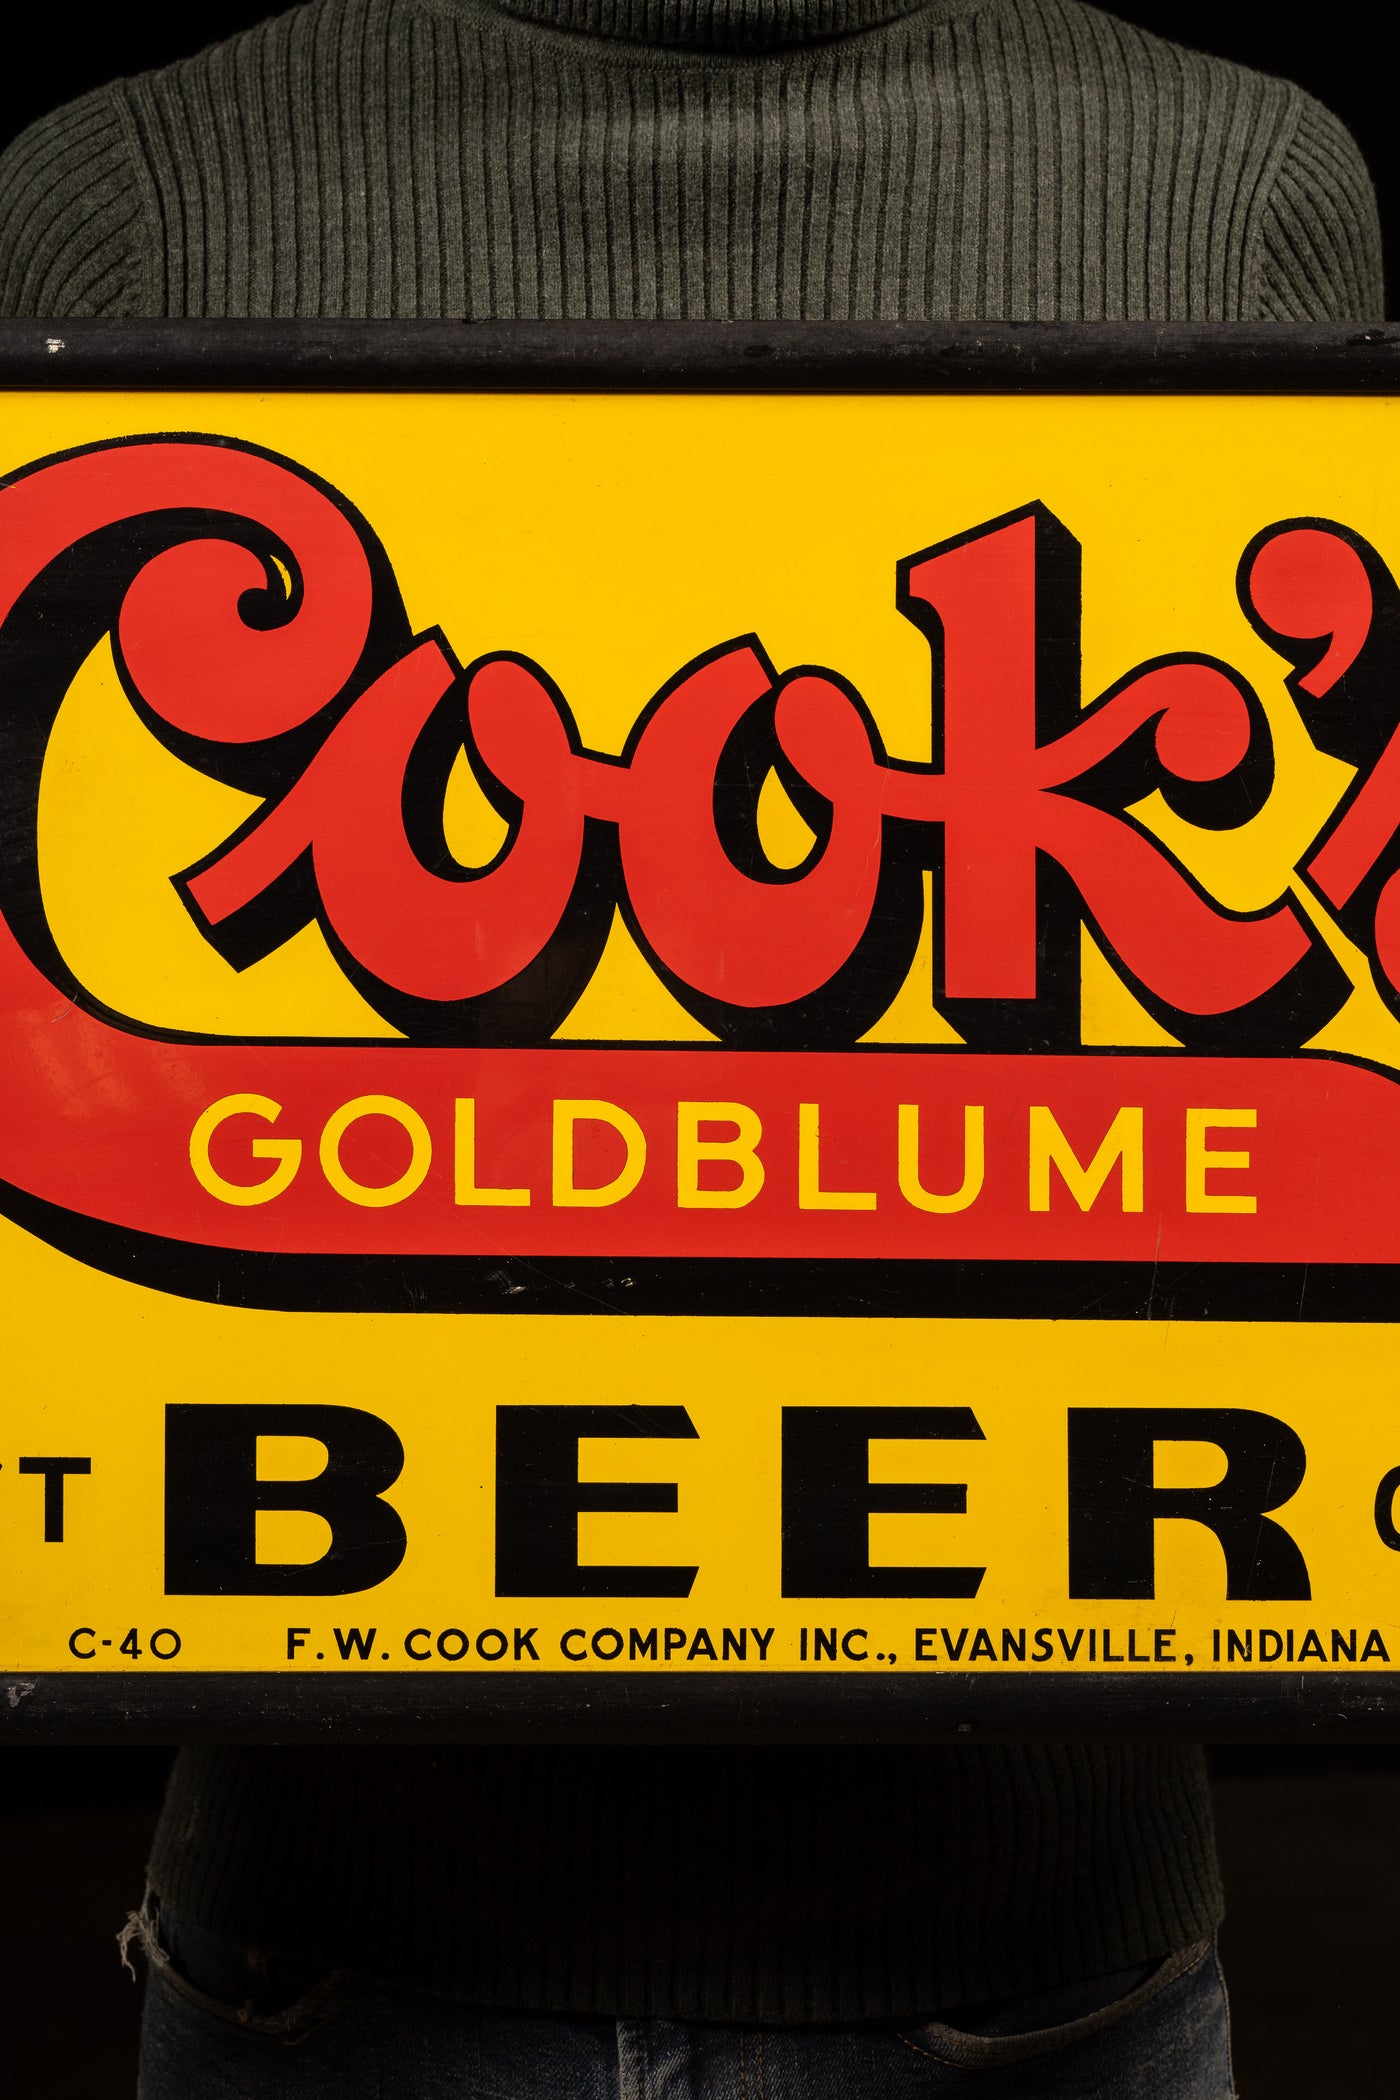 Framed Cook's Goldblume Metal Advertising Sign